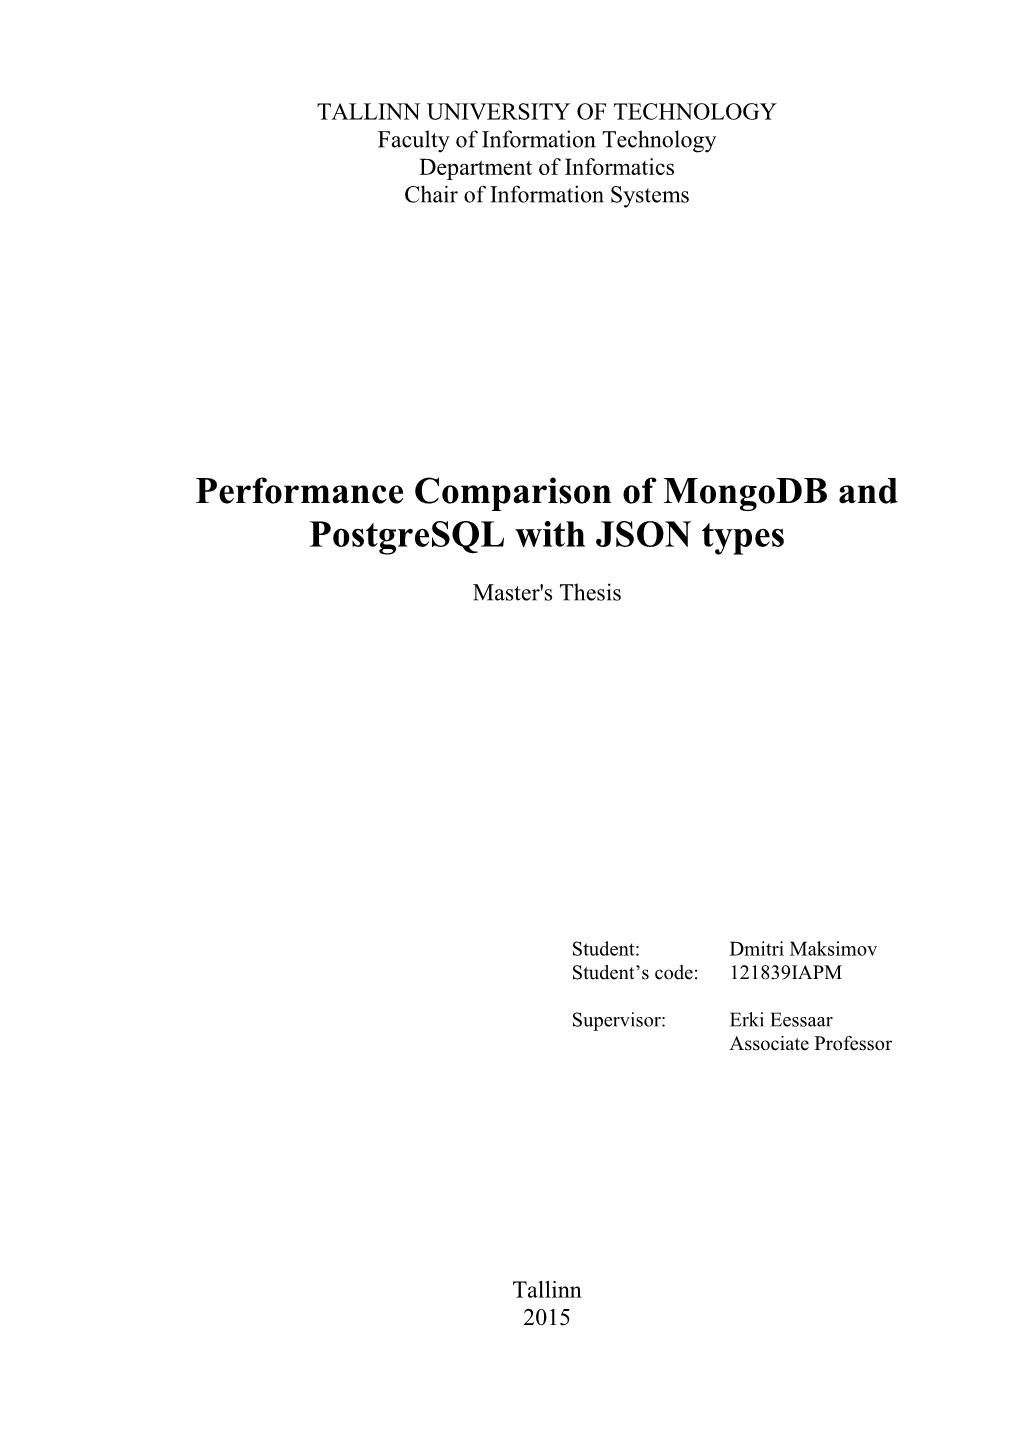 Performance Comparison of Mongodb and Postgresql with JSON Types